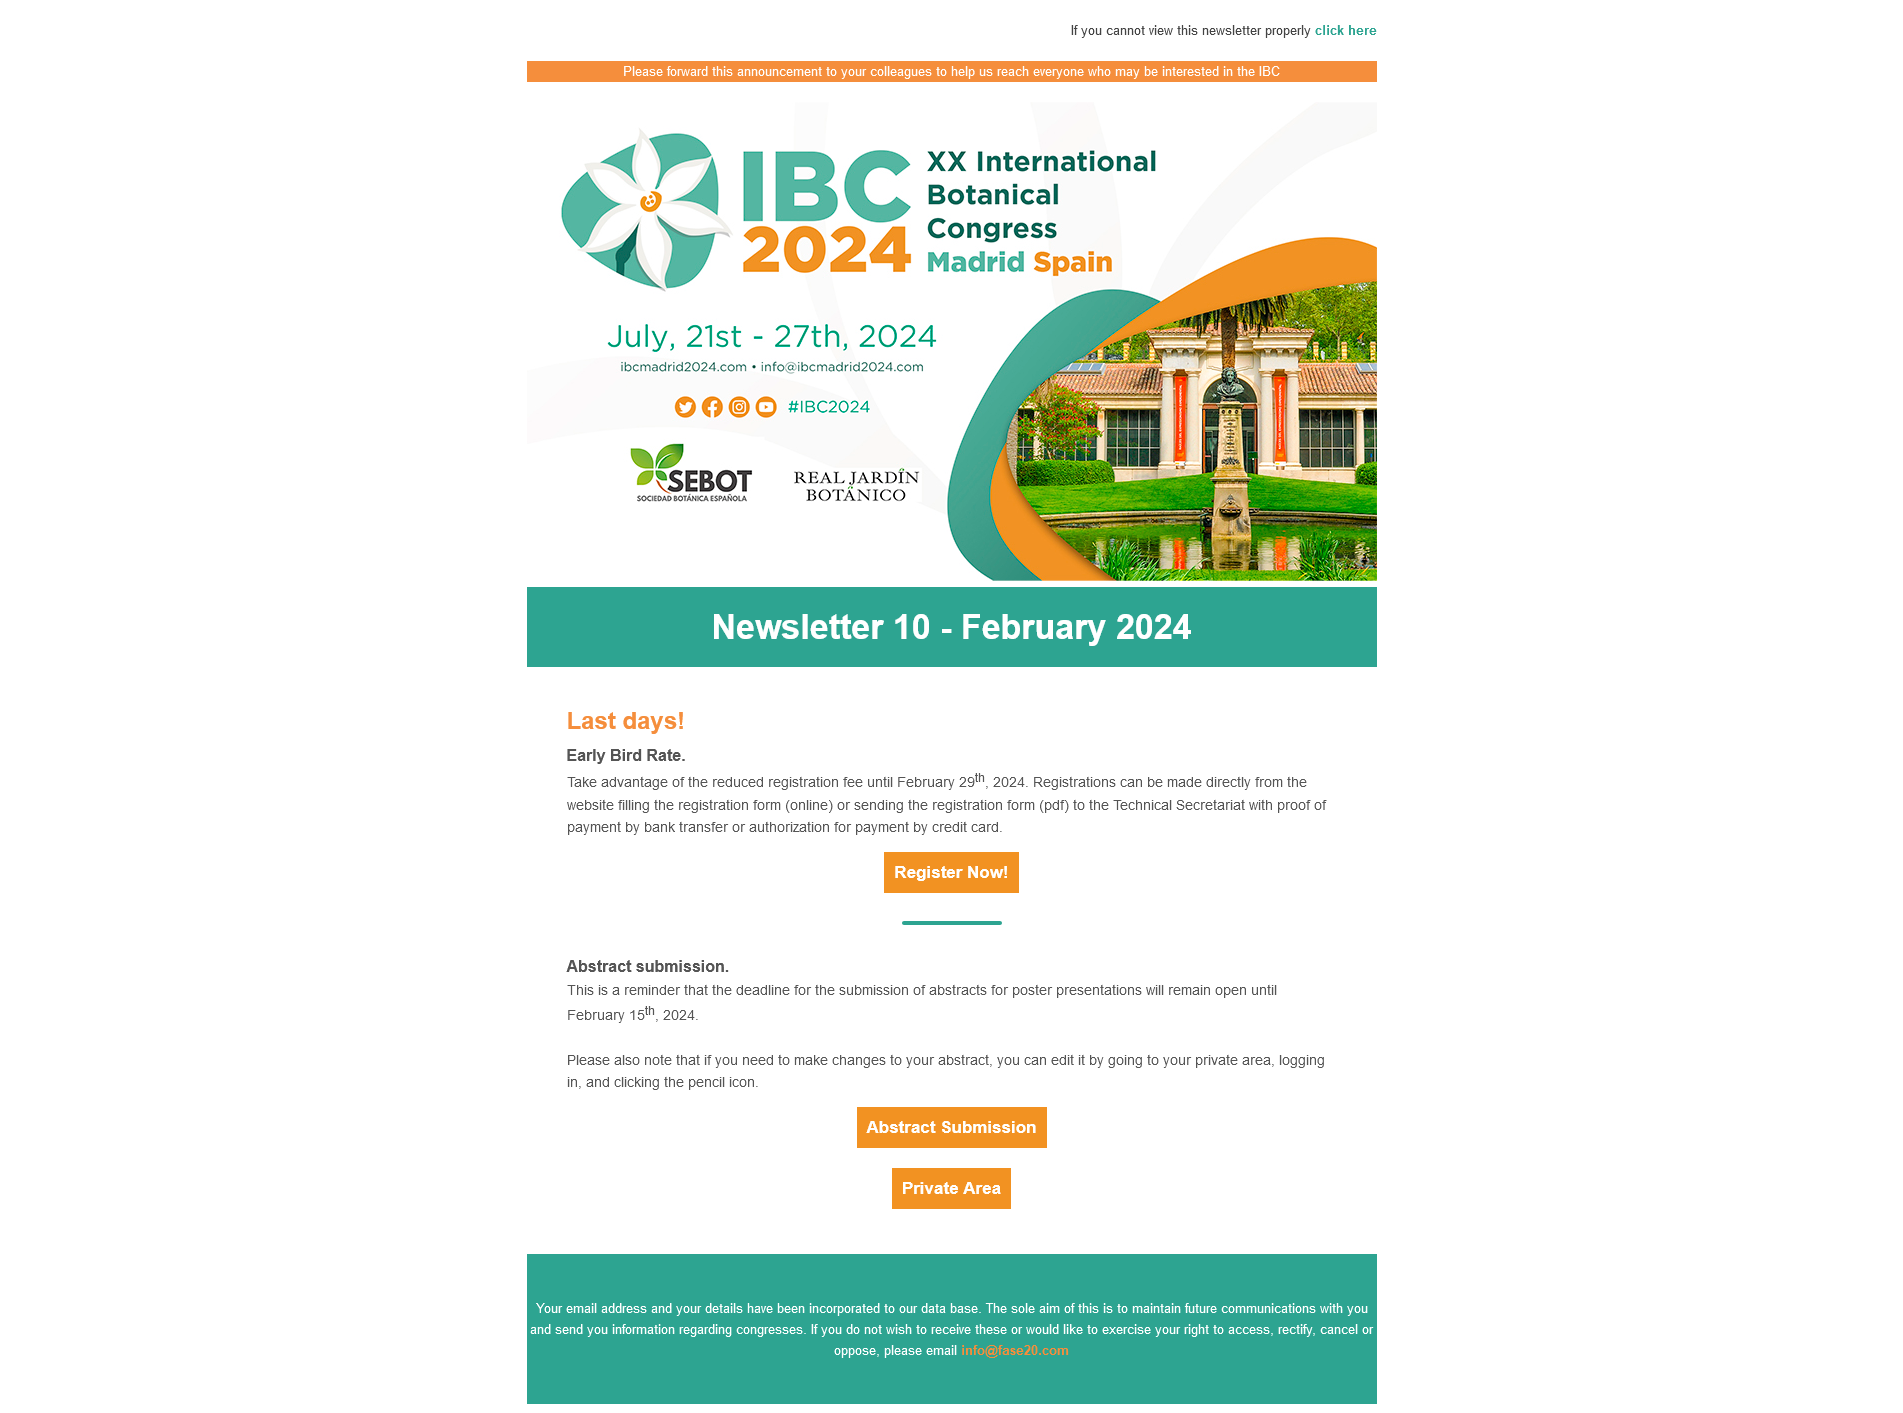 XX INTERNATIONAL BOTANICAL CONGRESS MADRID 2024 - Newsletter 10